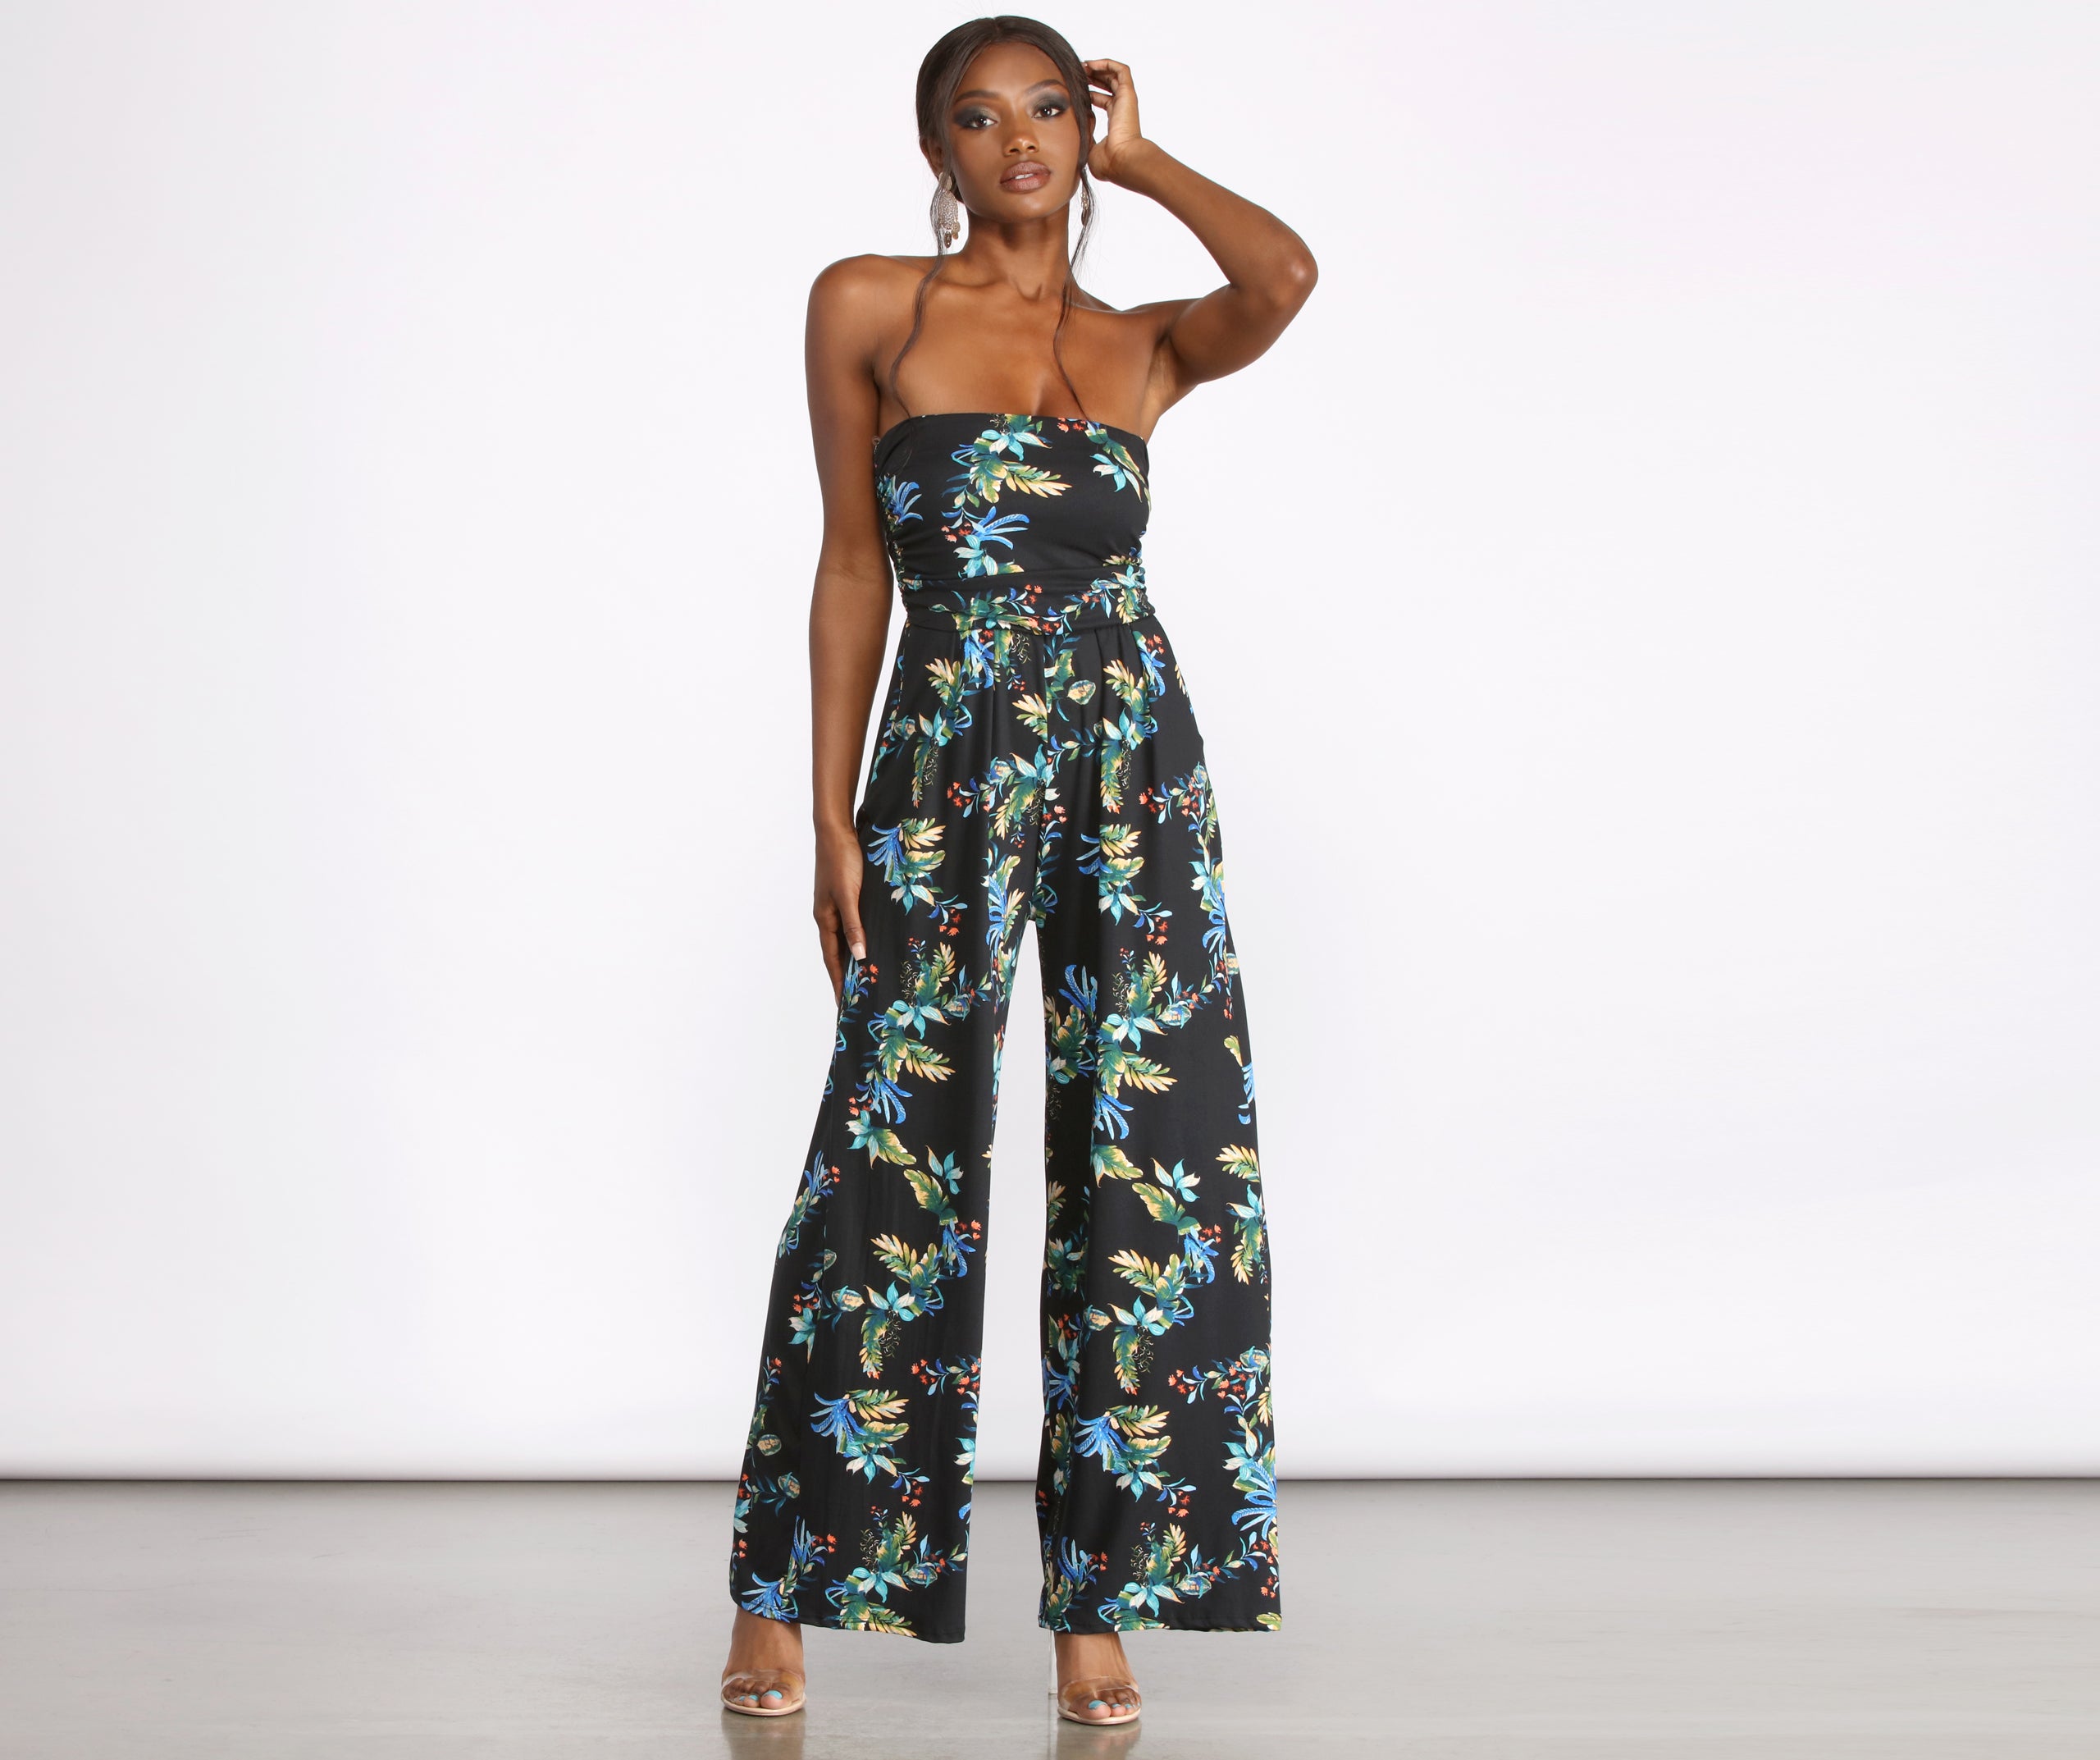 Tropical Print Wrap Jumpsuit - Navy/Multi or Black/Multi - Just $4